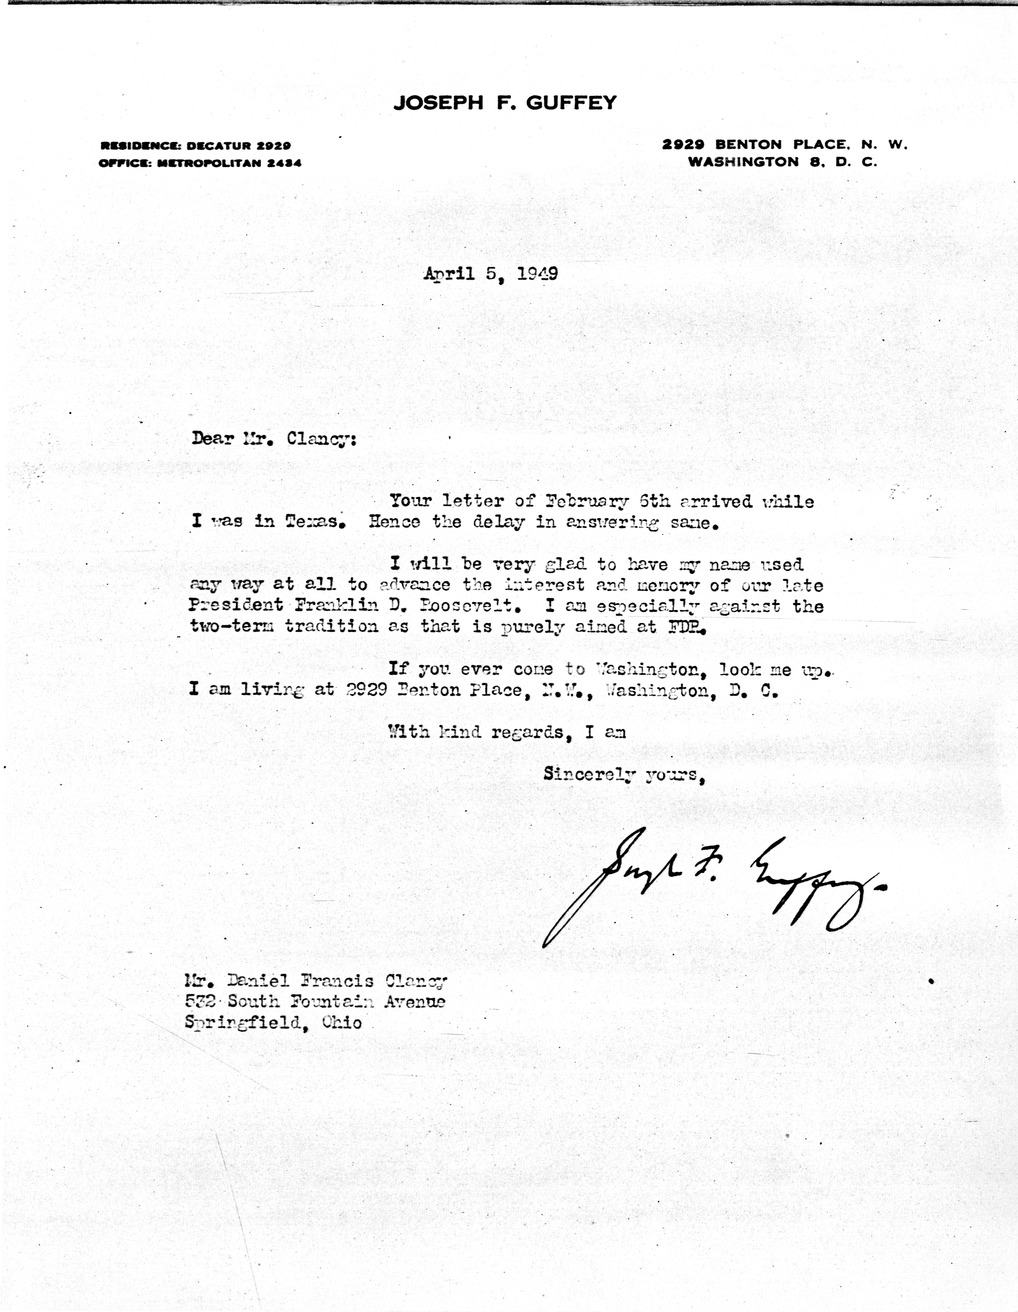 Letter from Joseph F. Guffey to Daniel F. Clancy